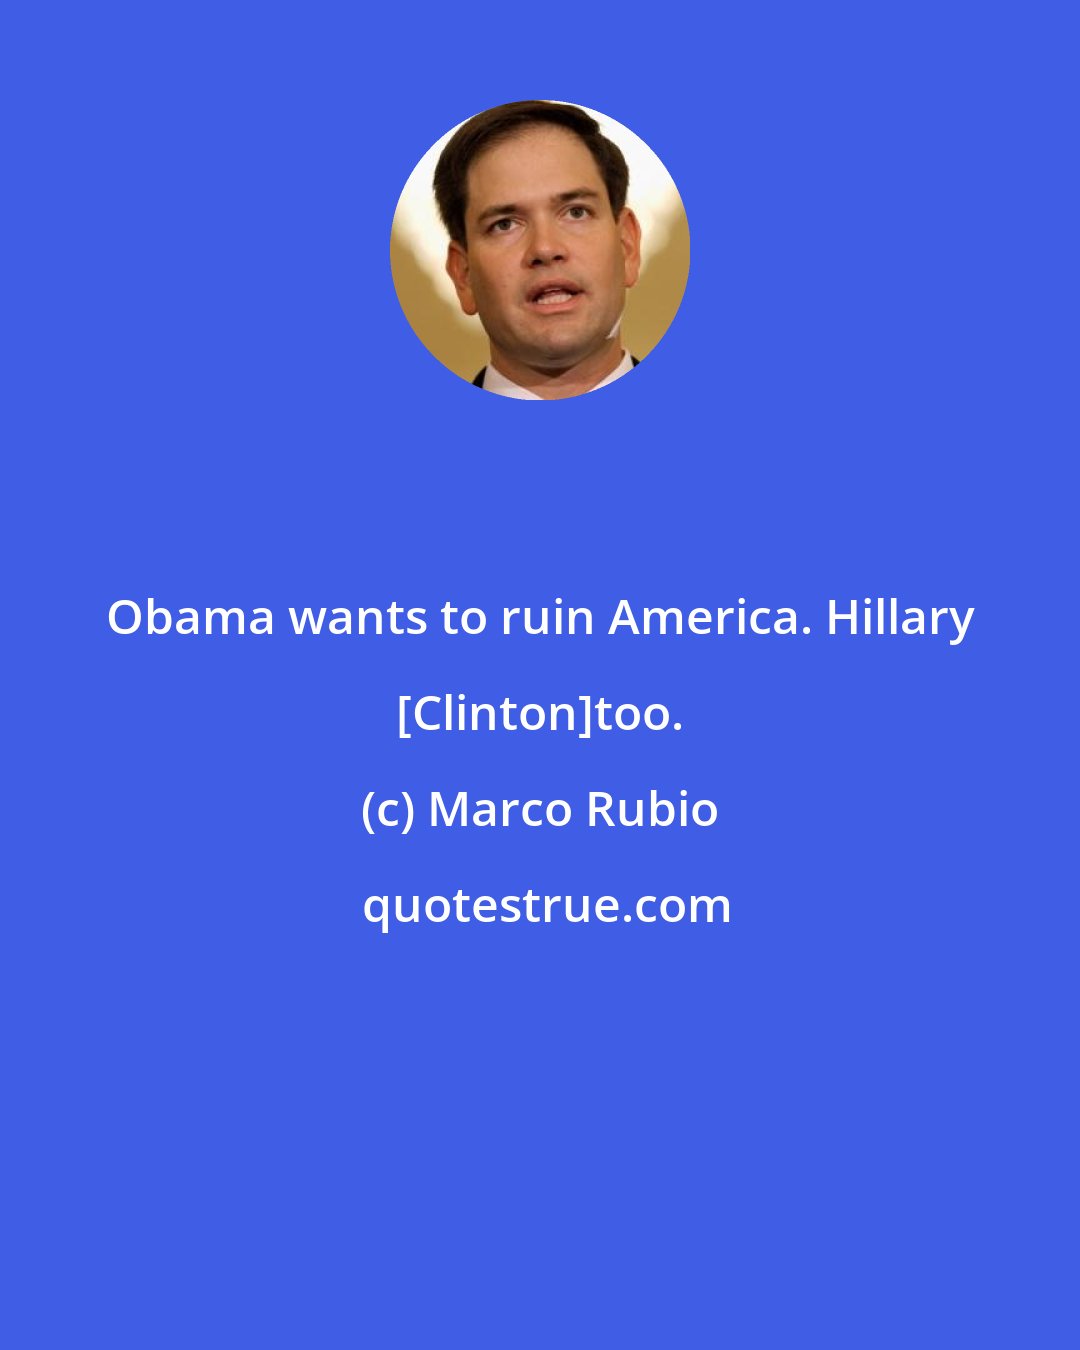 Marco Rubio: Obama wants to ruin America. Hillary [Clinton]too.